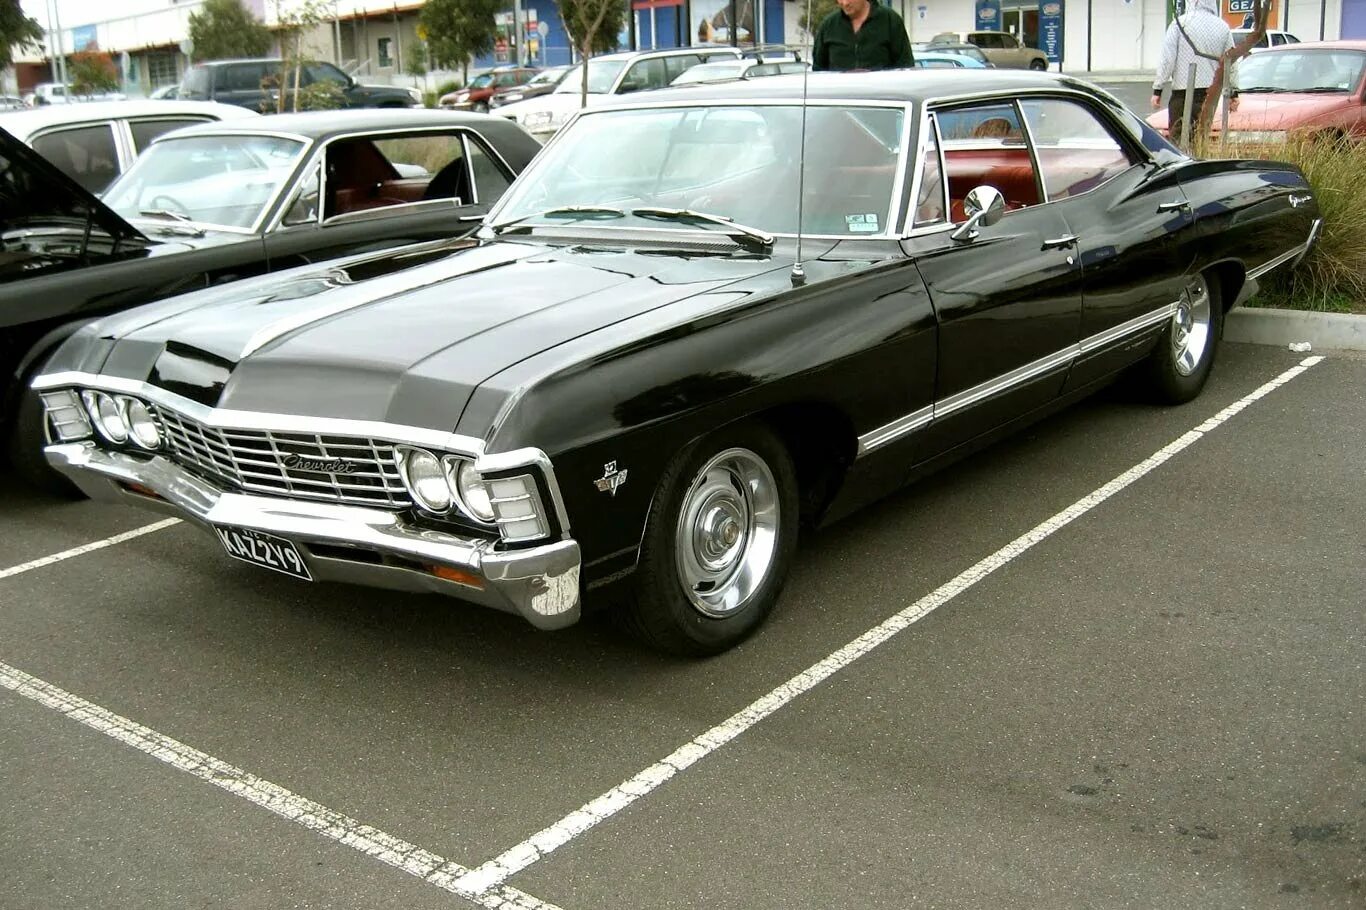 Chevrolet impala год. Шевроле Импала 1967. Shavrale Tempala 1967. Шевроле Импала 67. Машина Шевроле Импала 1967.